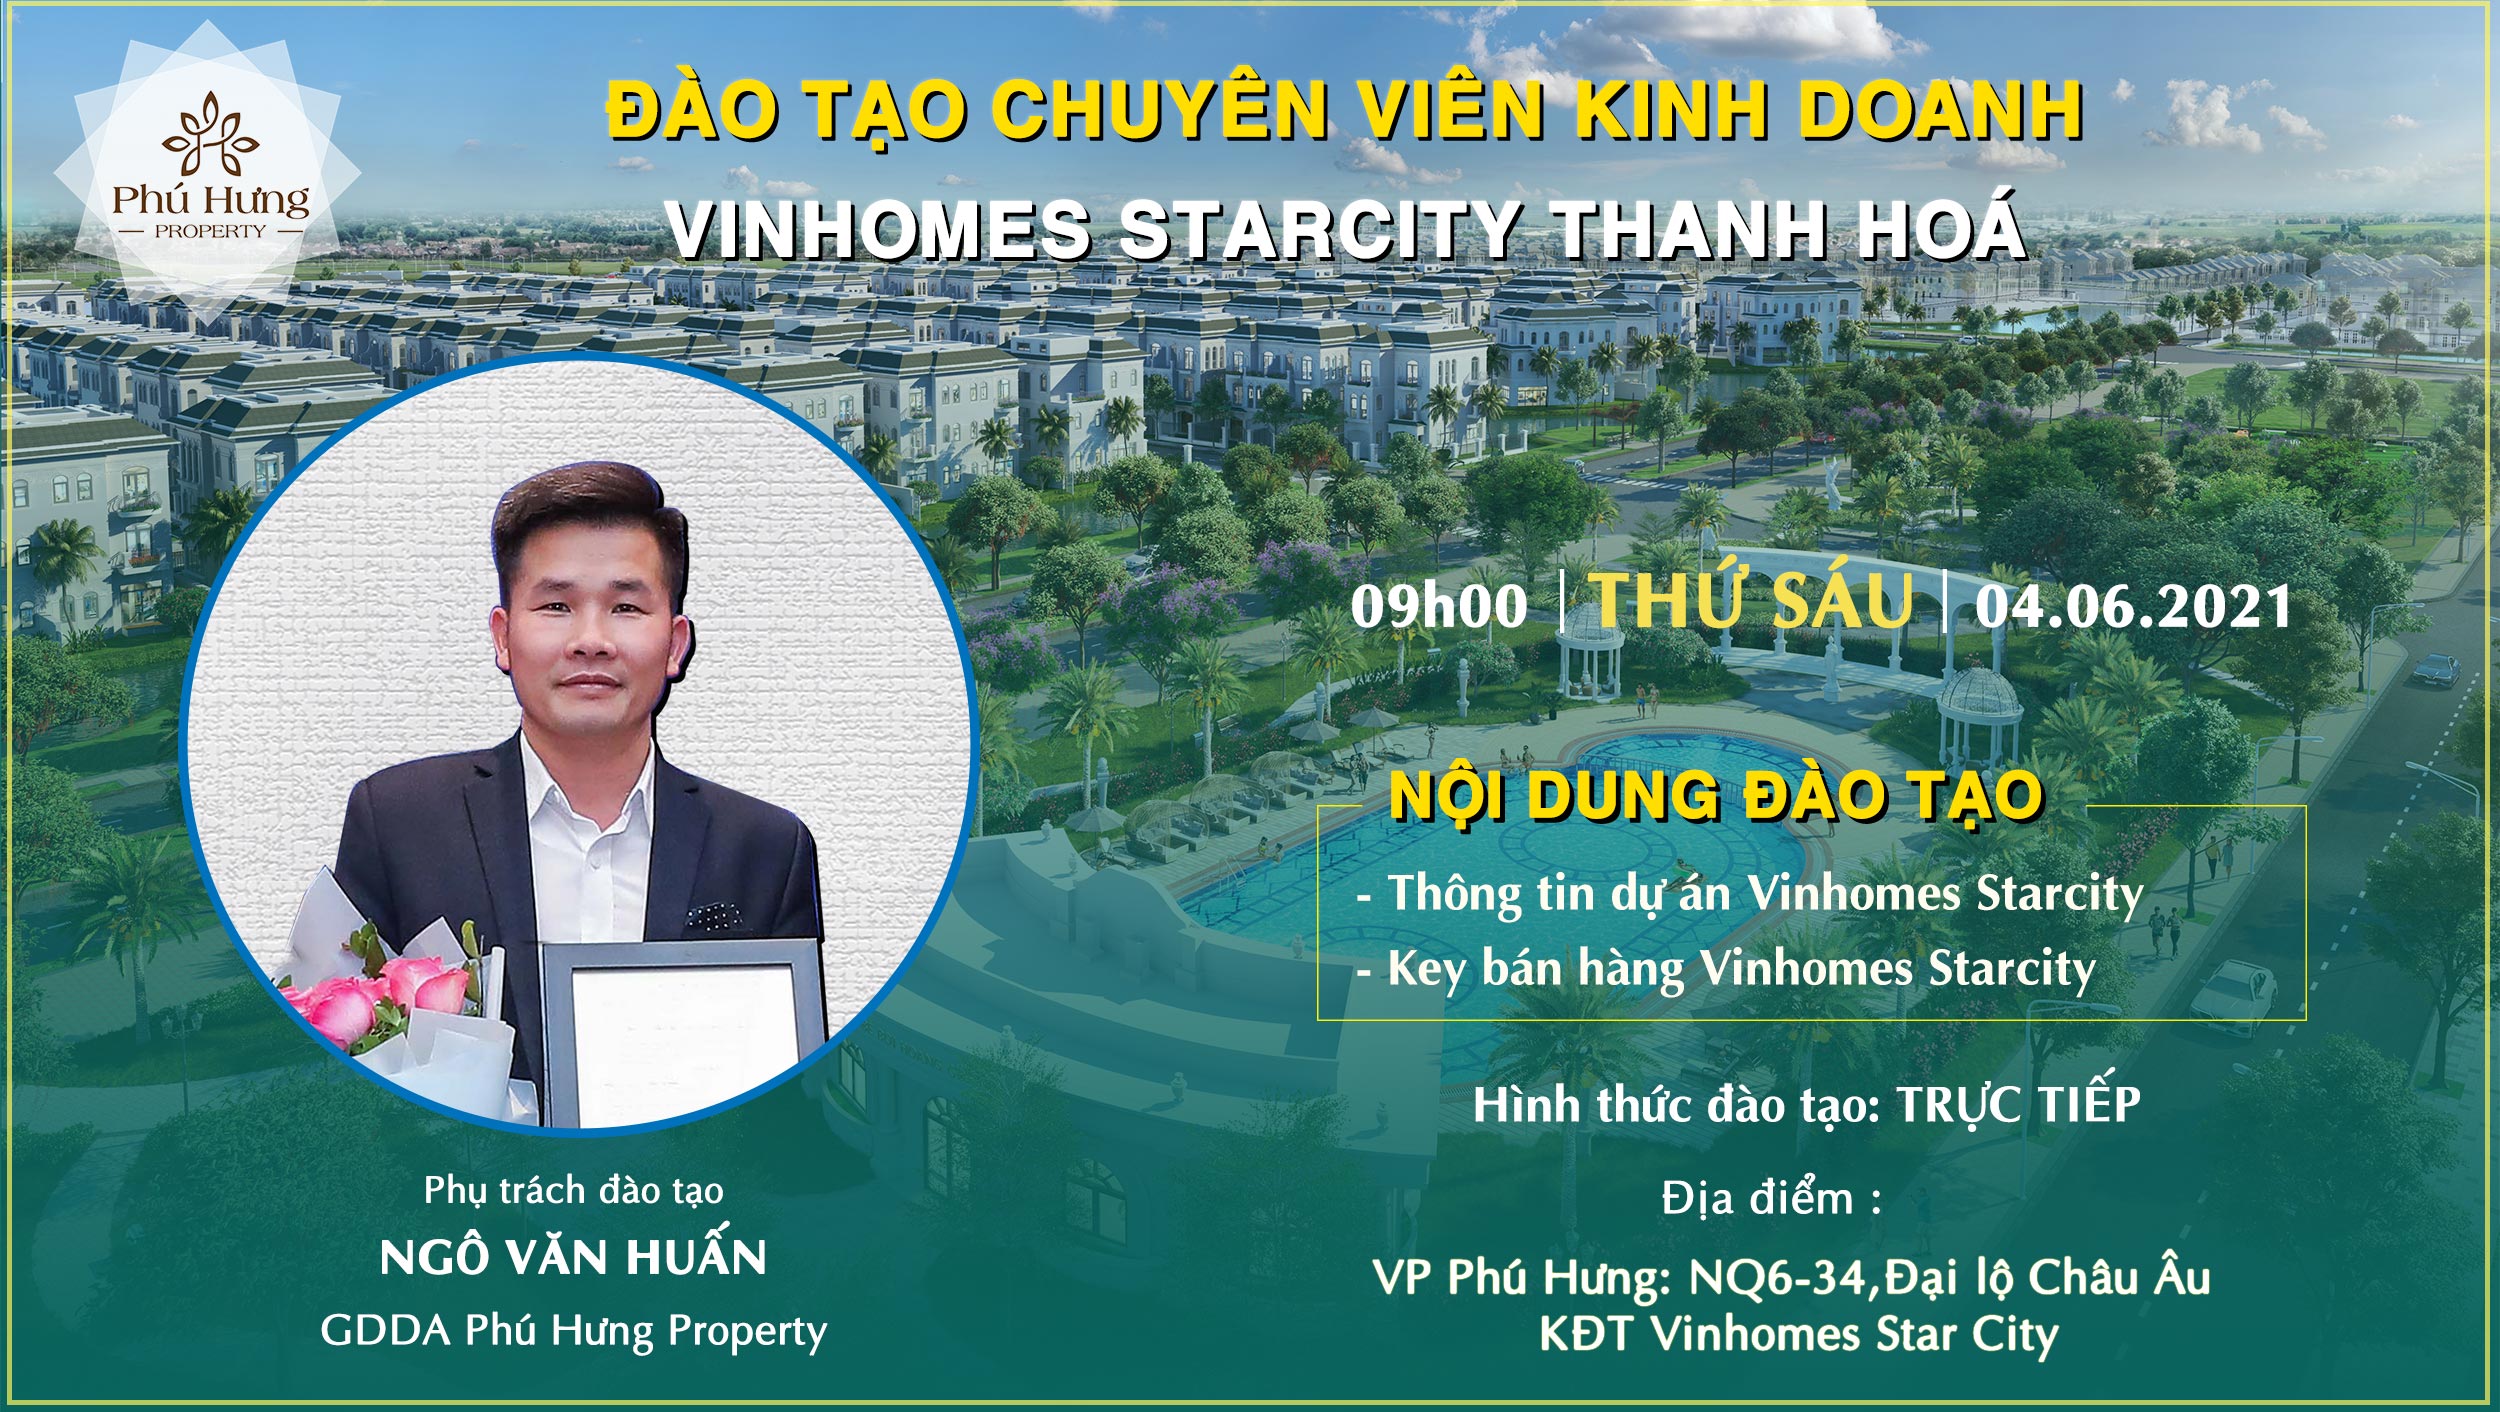 Dao tao chuyen vien kinh doanh Vinhomes Star City Thanh Hoa